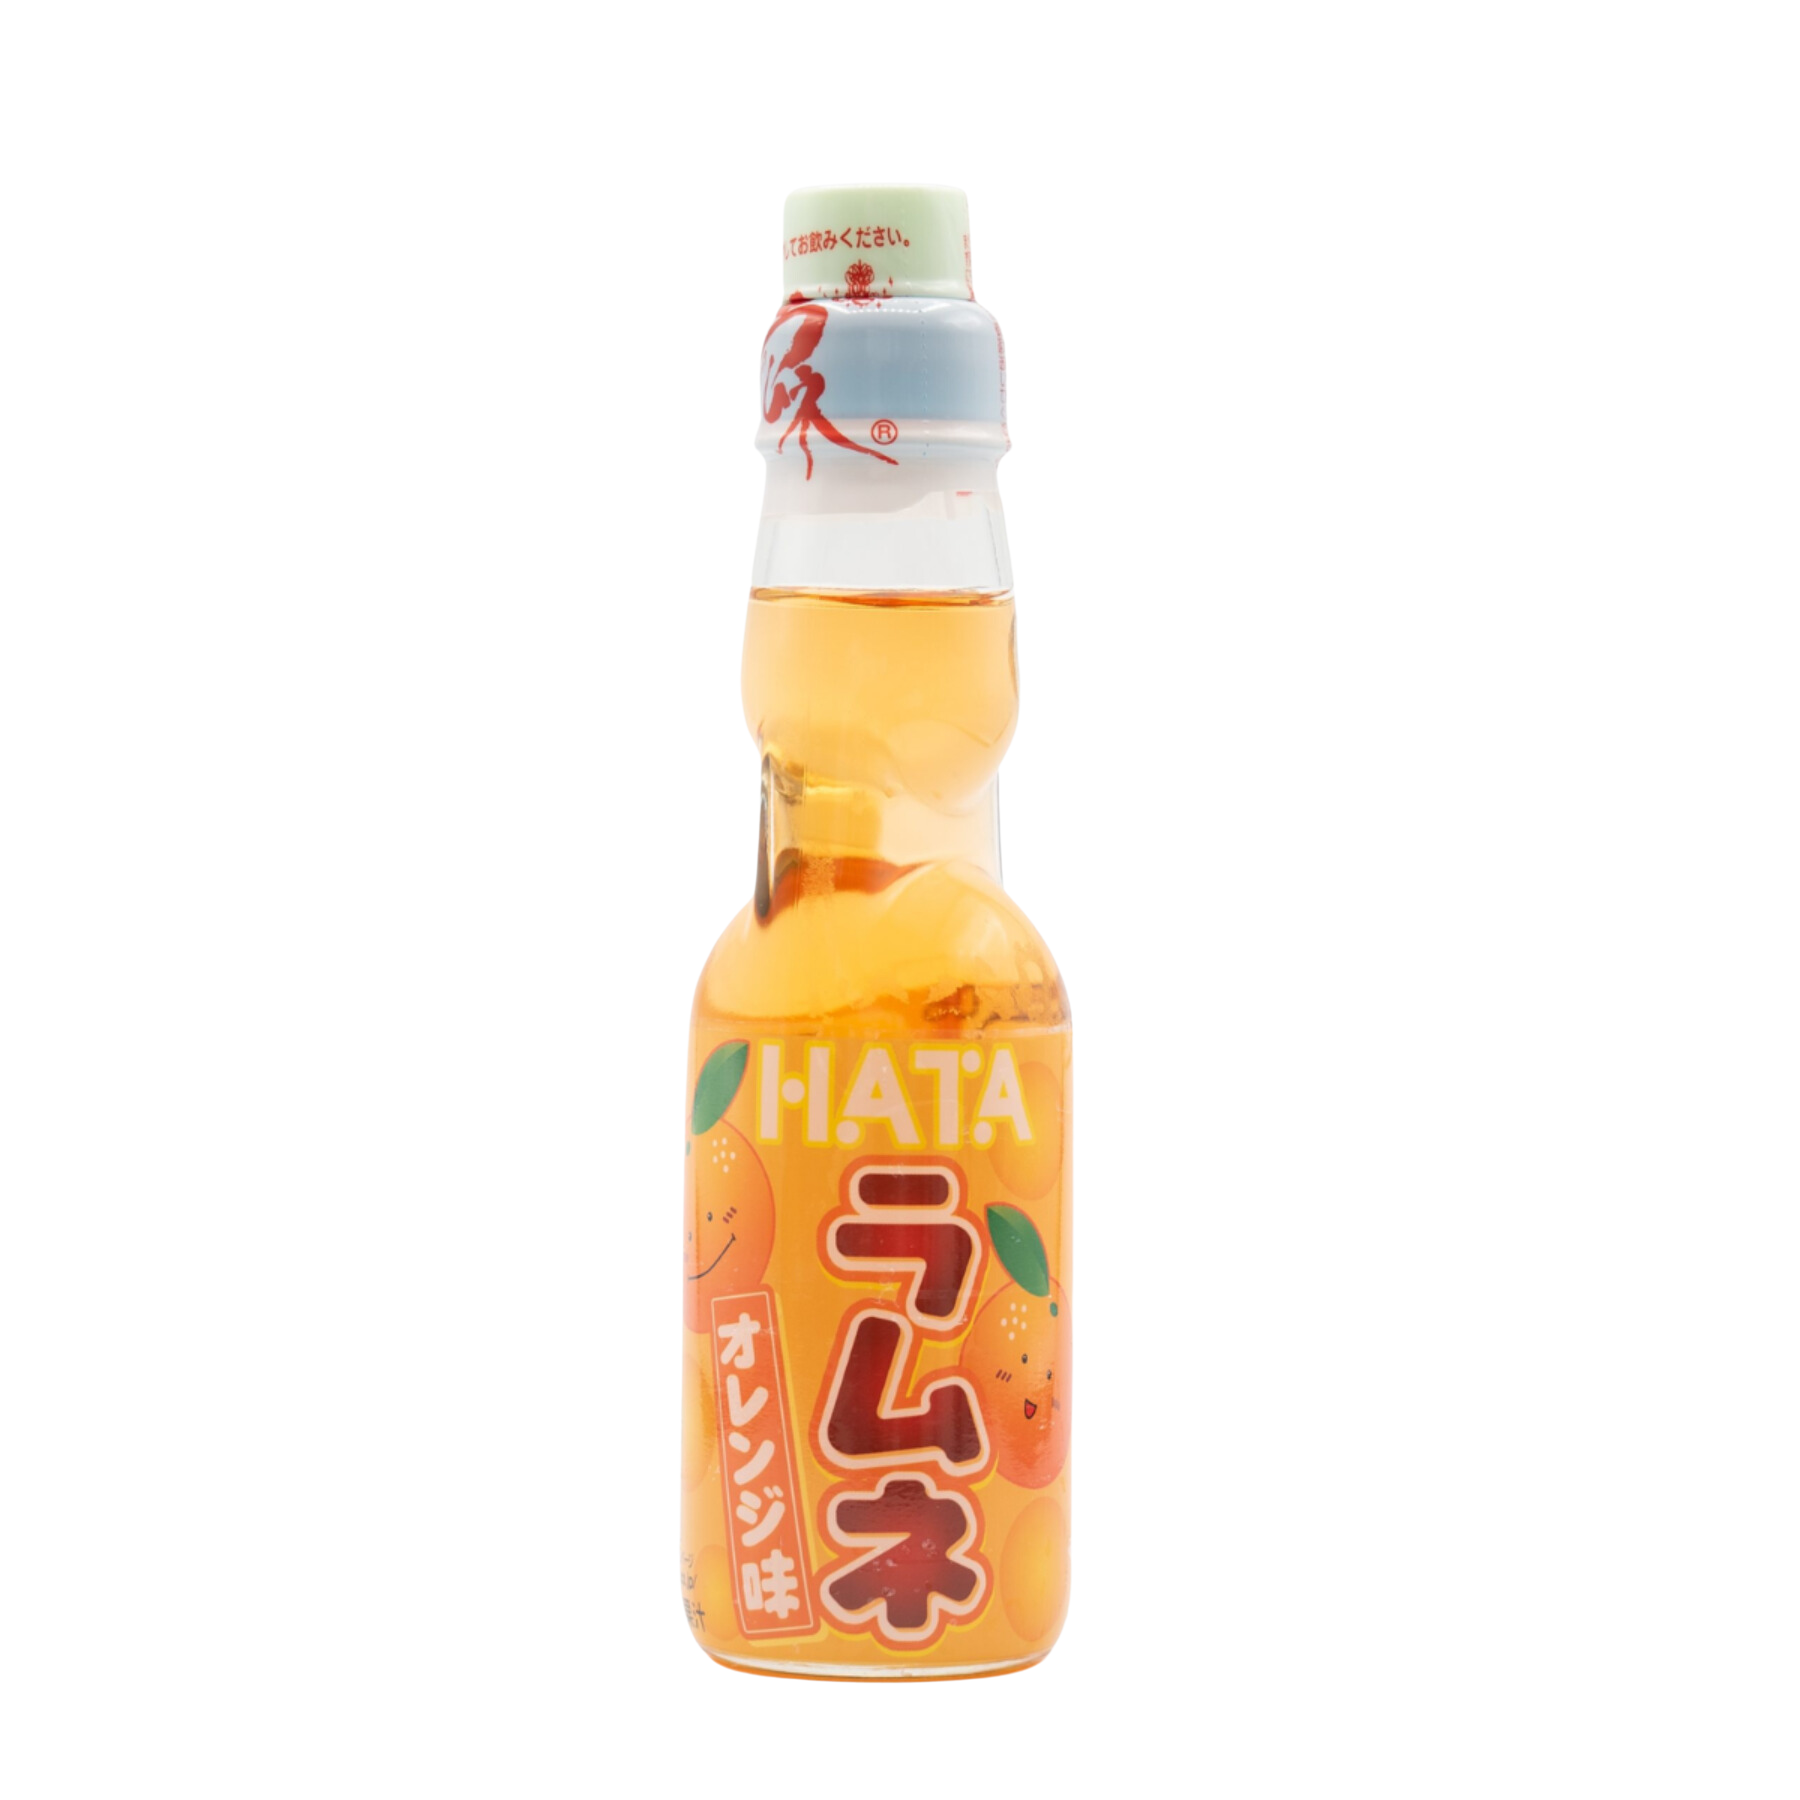 Hatakose ramune Orange